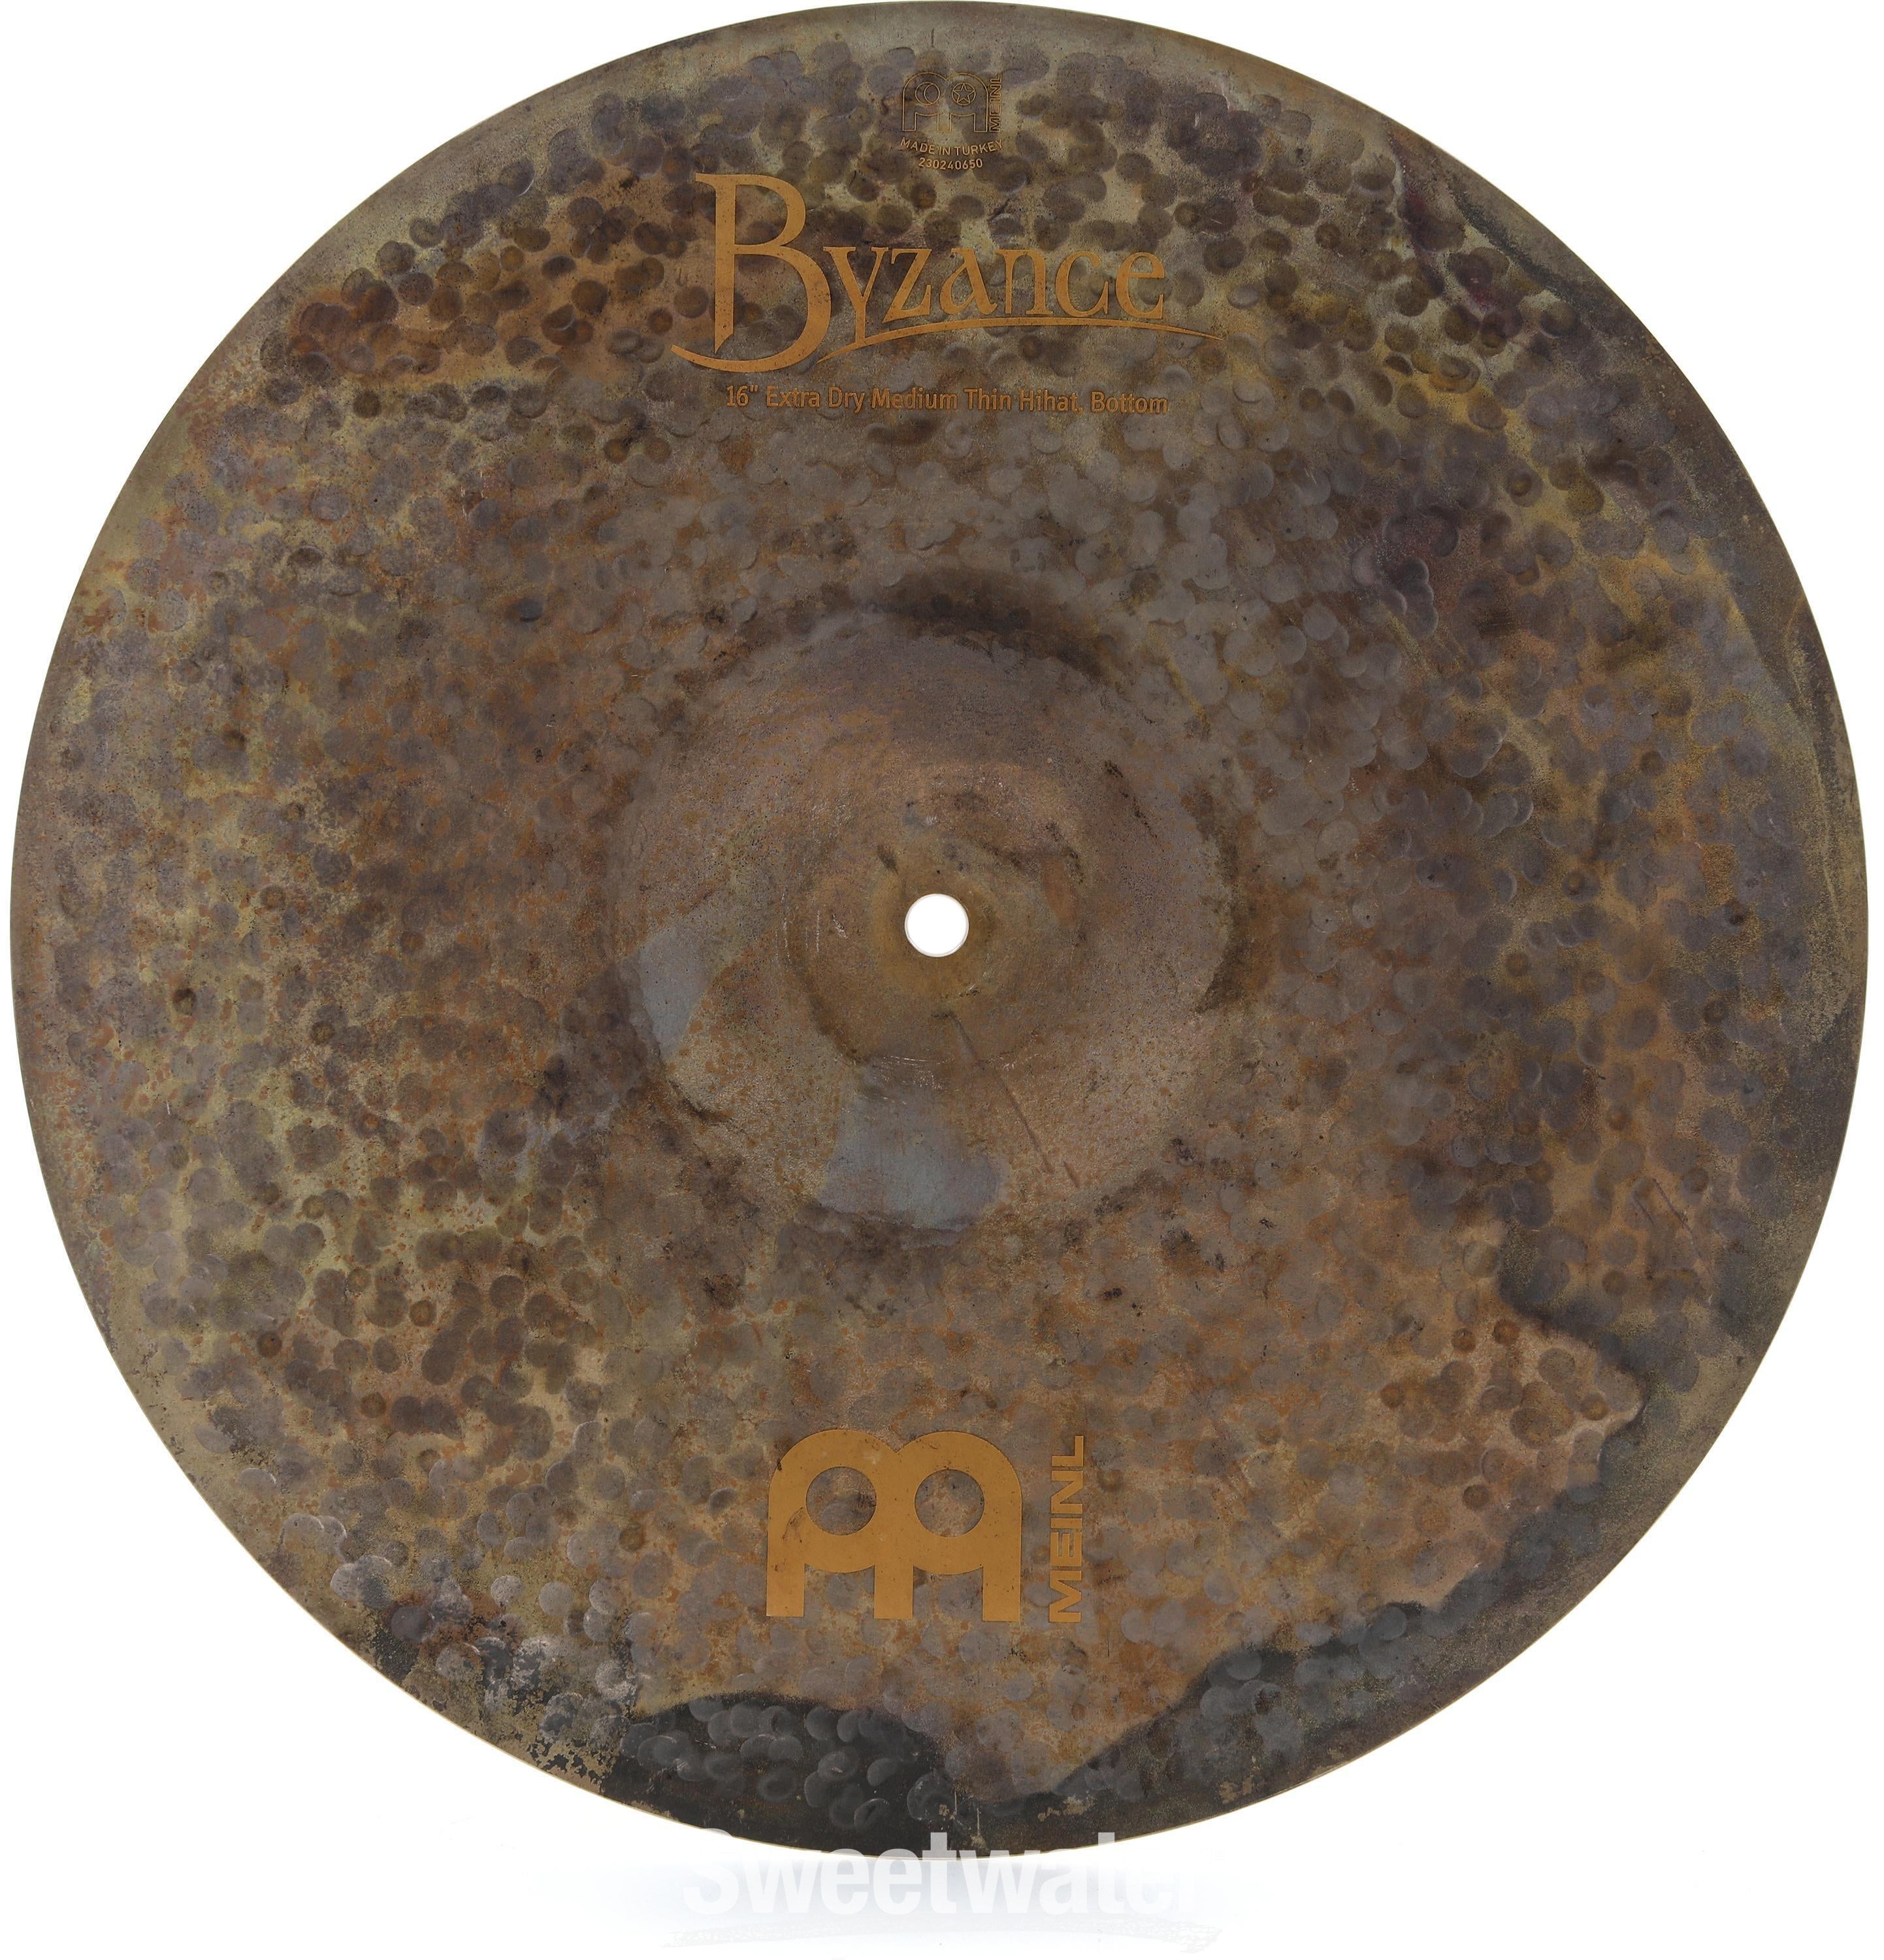 Meinl Cymbals 16 inch Byzance Extra Dry Medium Thin Hi-hat Cymbals